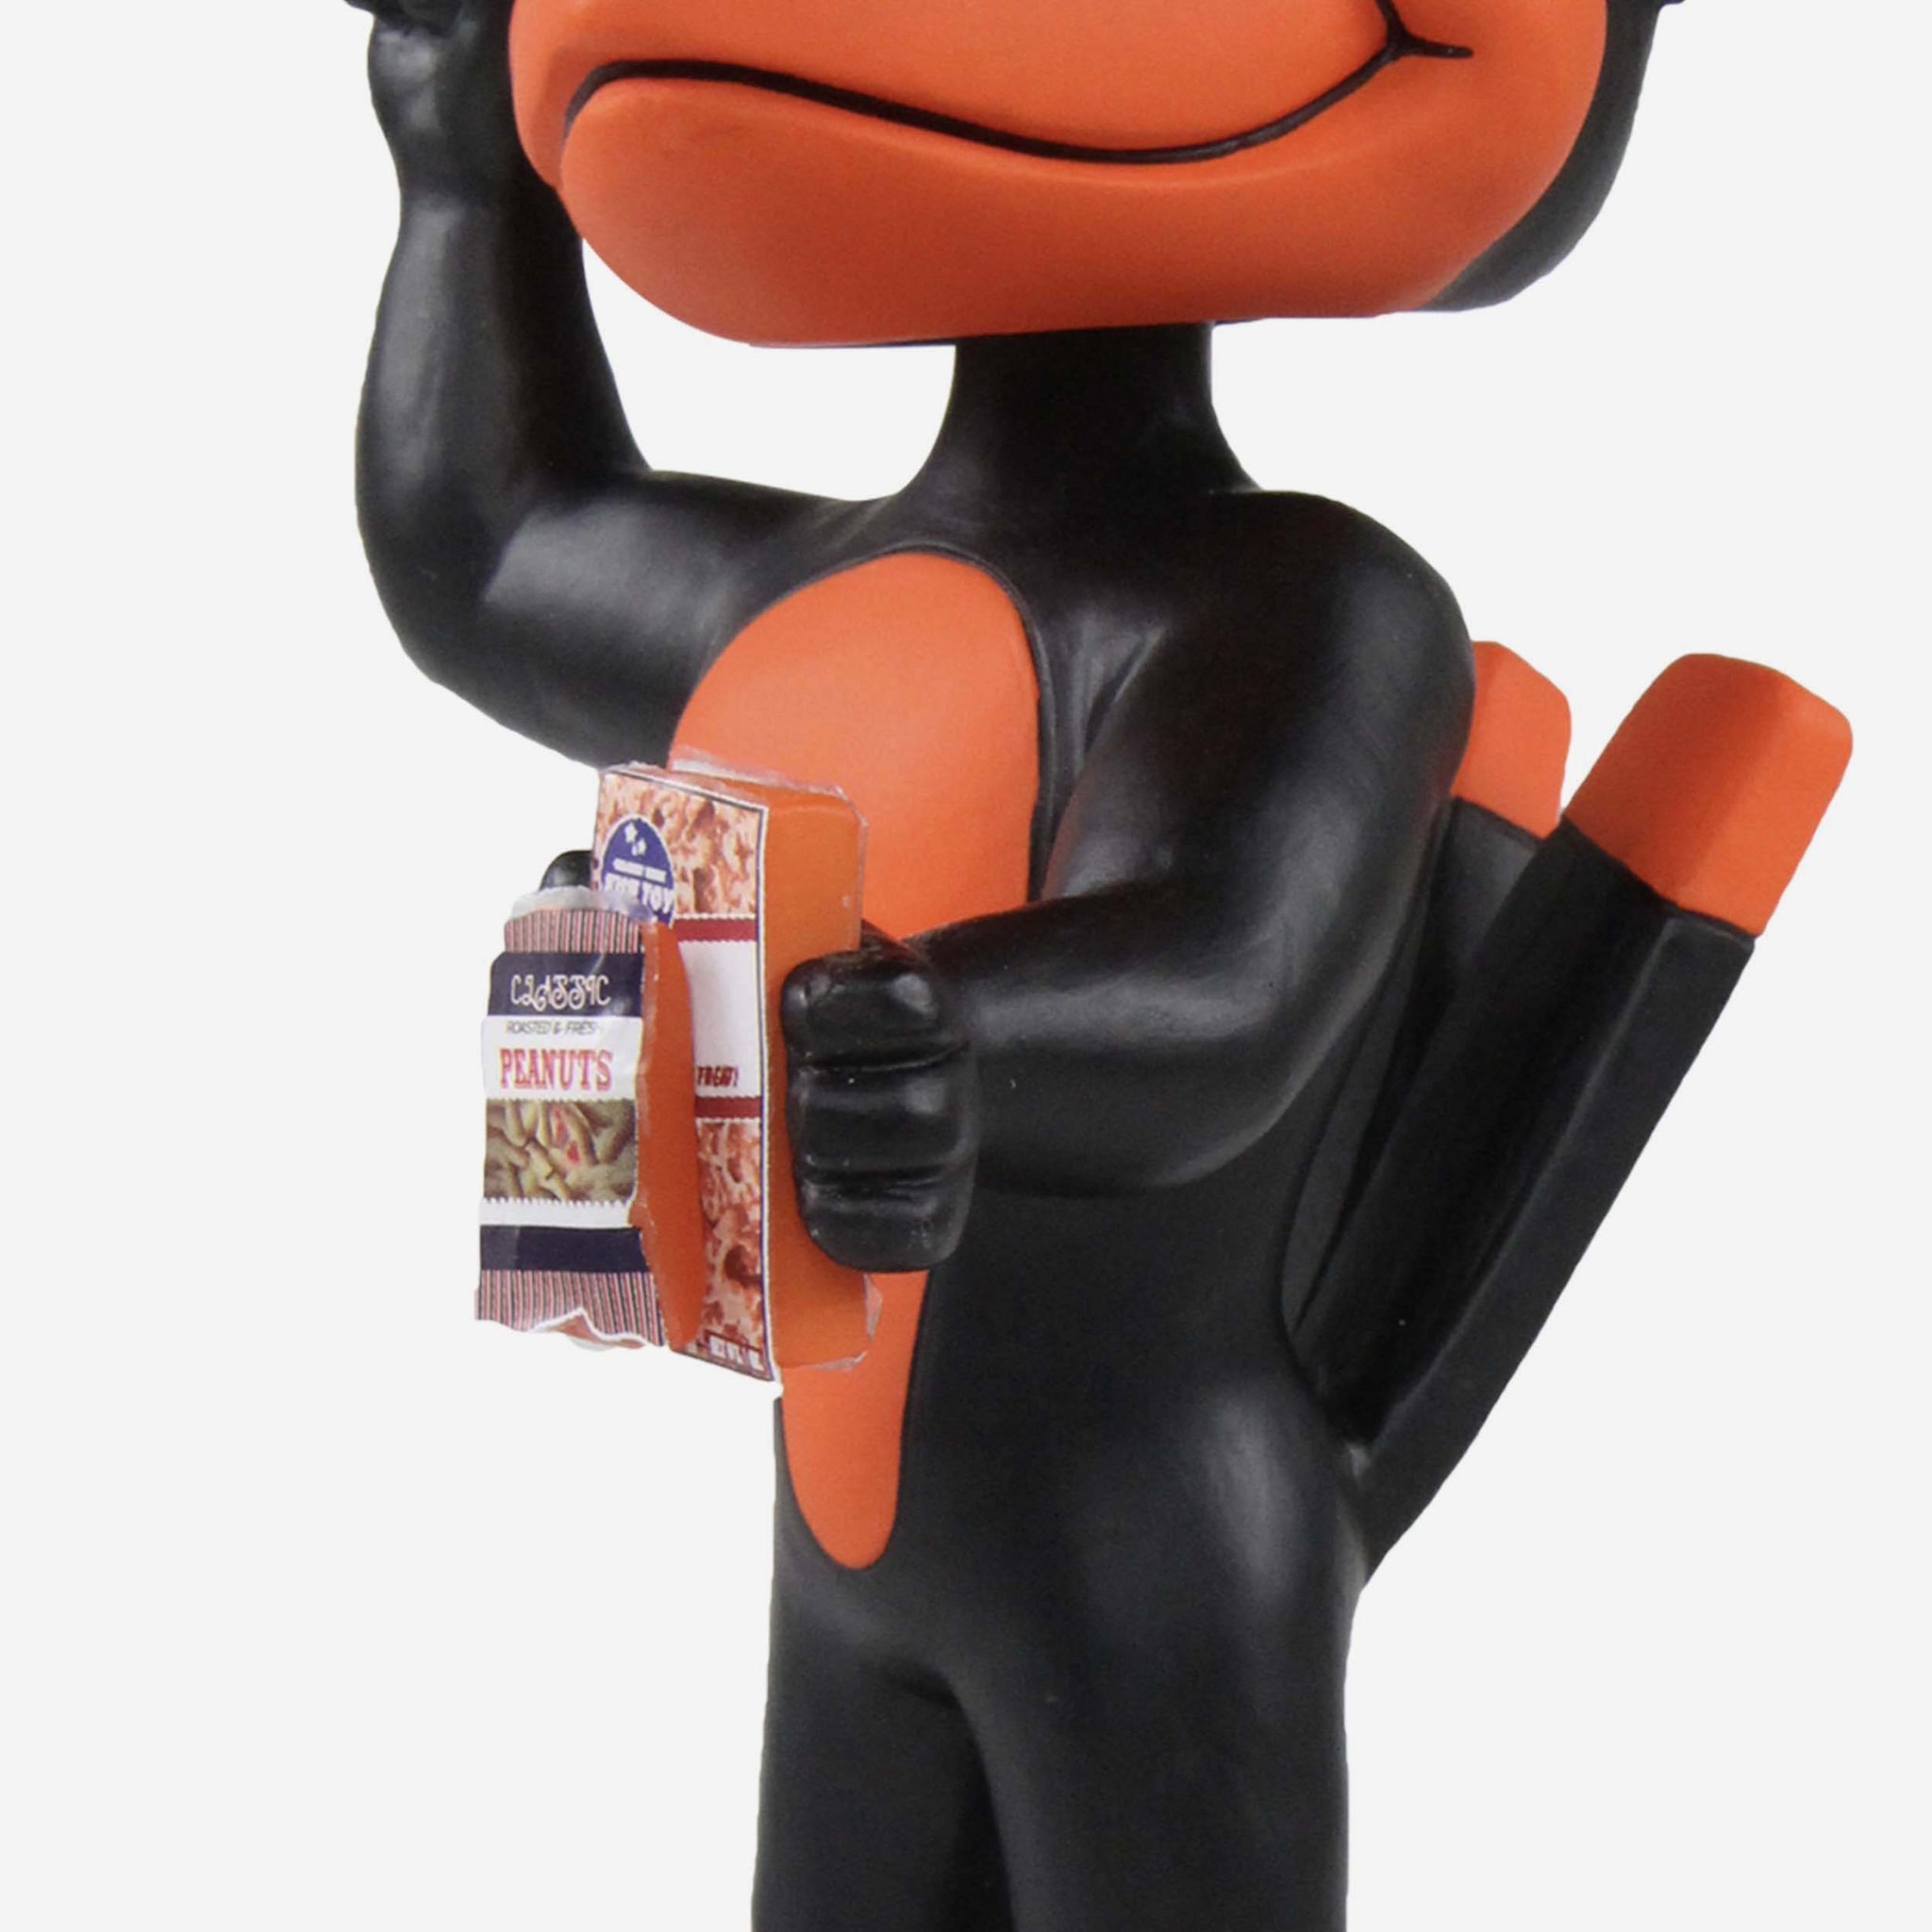 The Oriole Bird Baltimore Orioles No 1 Dad Mascot Bobblehead FOCO